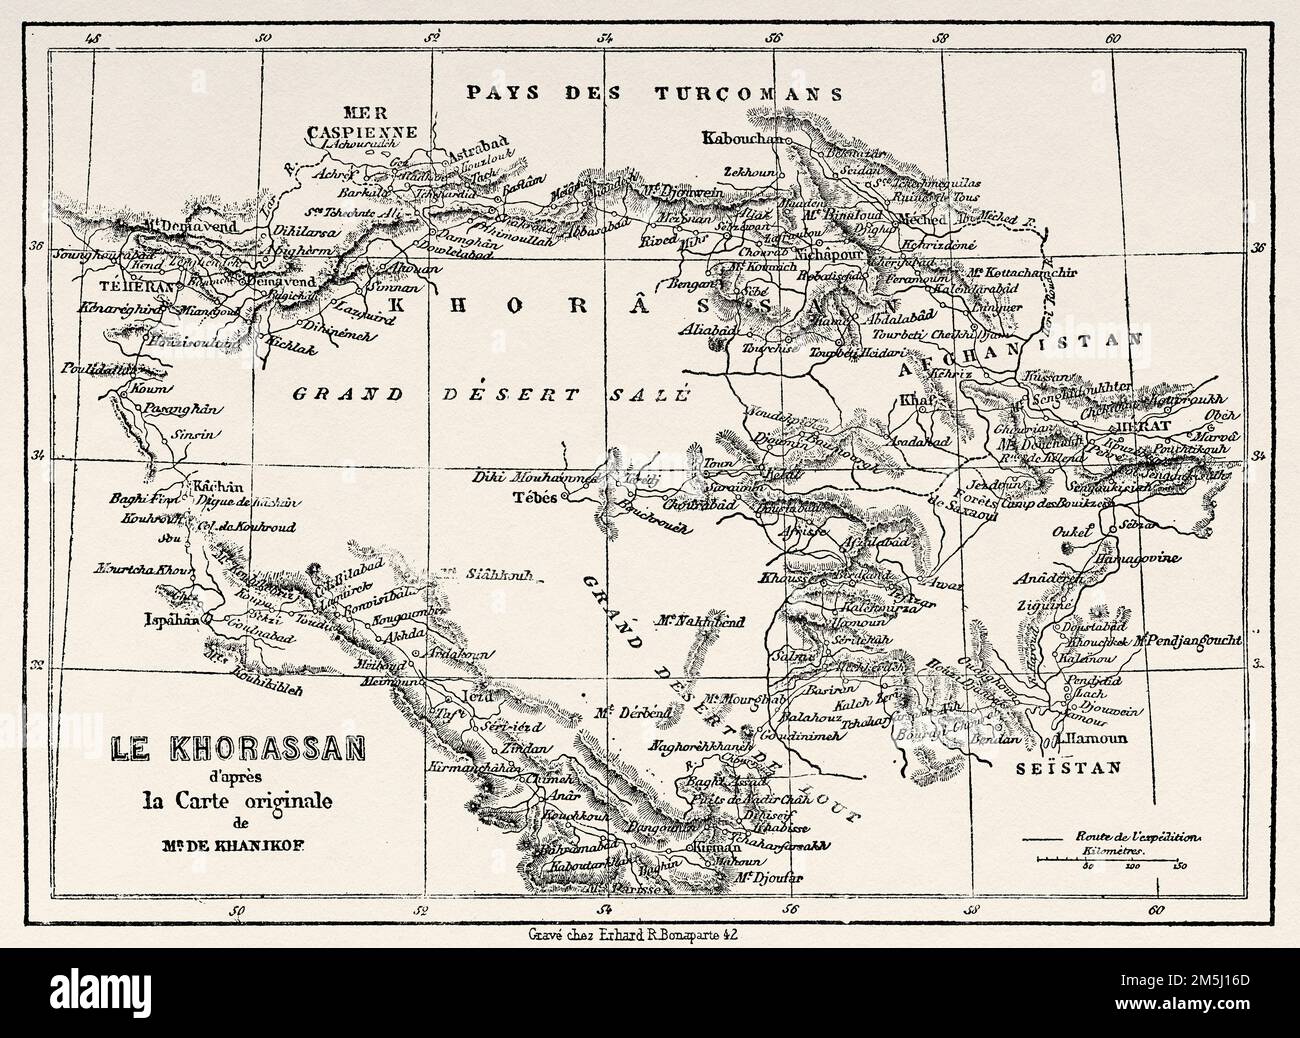 Old map of Razavi Khorasan Province, Iran. Journey in Khorassan by N de Khanikof 1858 Stock Photo